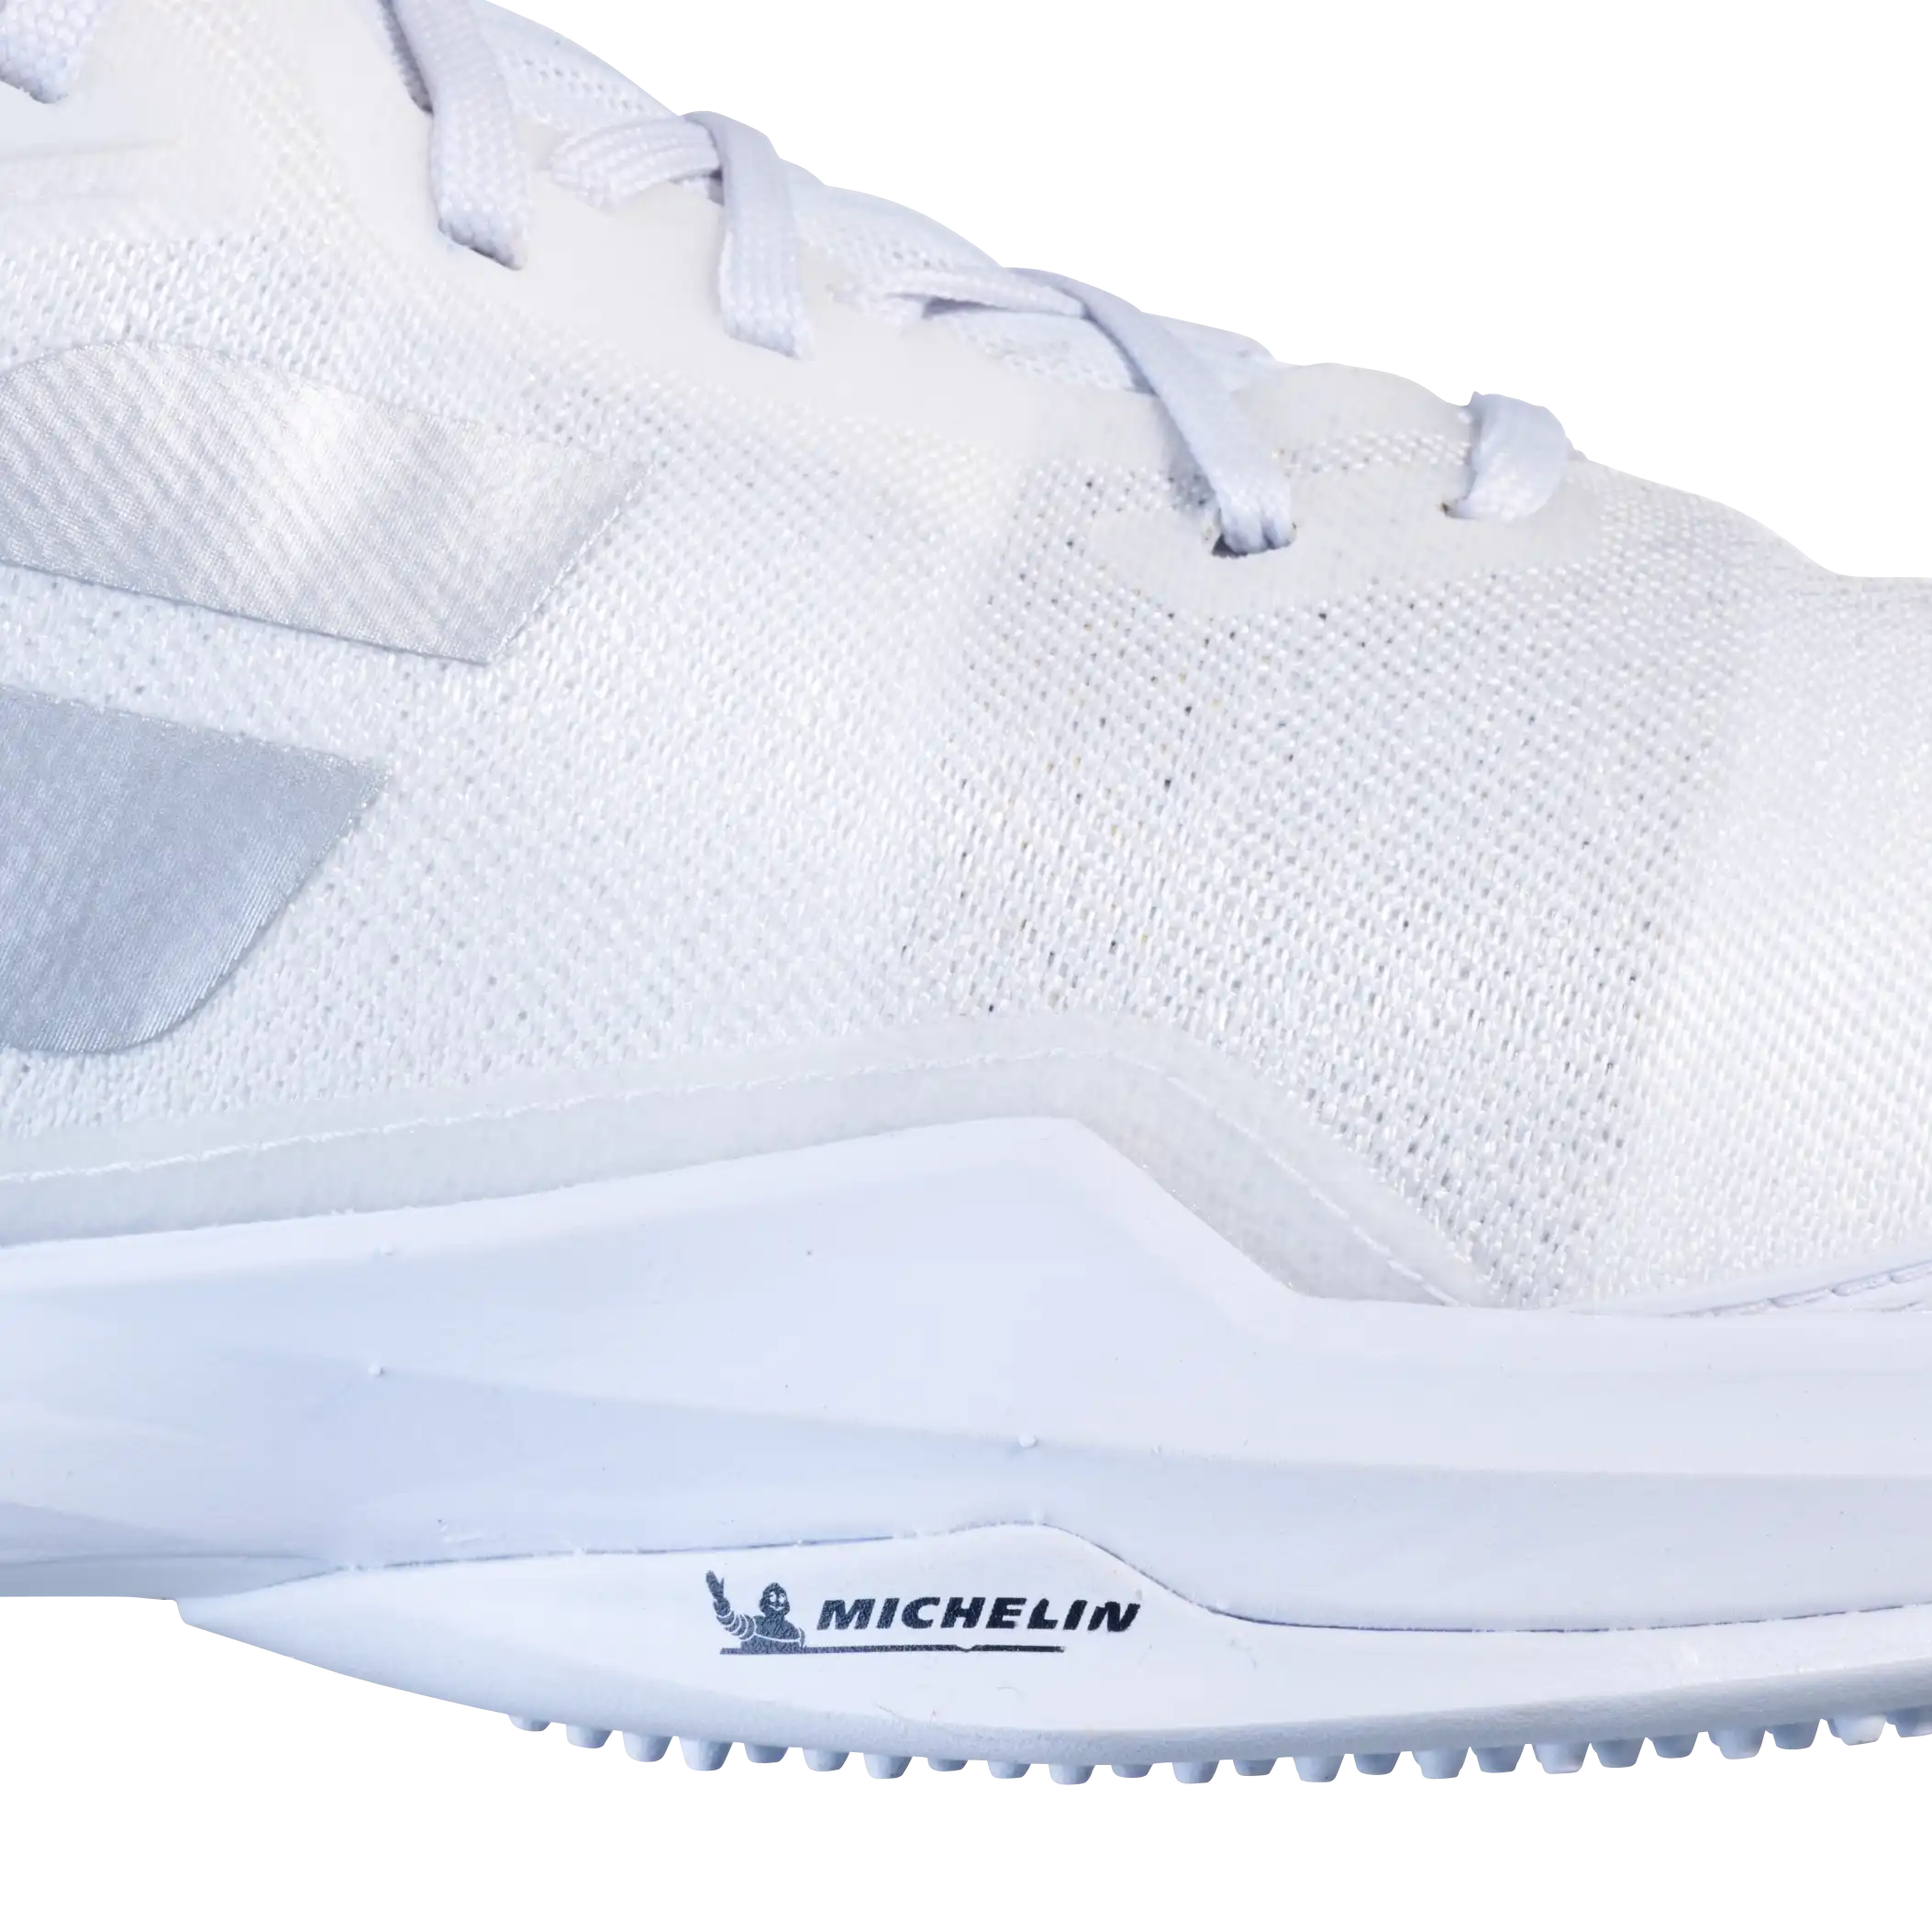 Babolat Men's Jet Mach 3 Grass Wimbledon Tennis Shoe In White/Silver